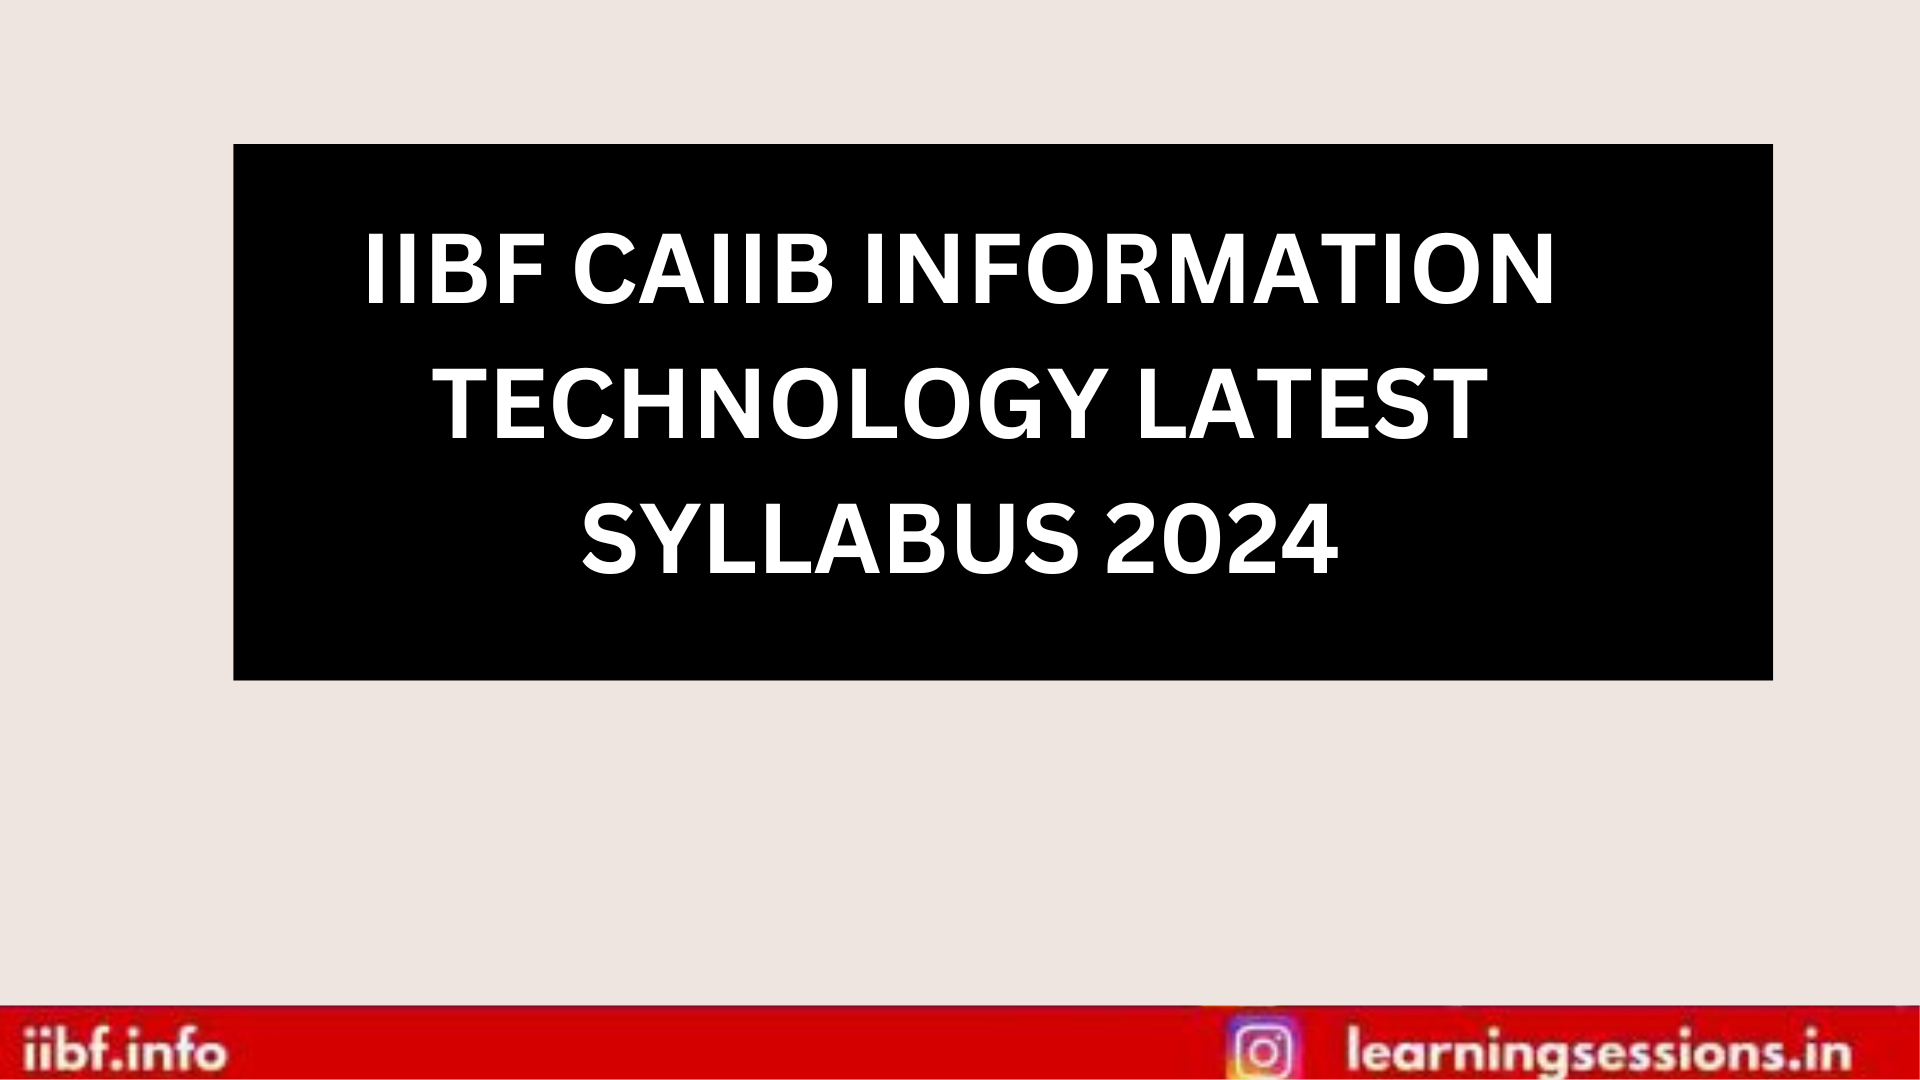 IIBF CAIIB INFORMATION TECHNOLOGY LATEST SYLLABUS 2024